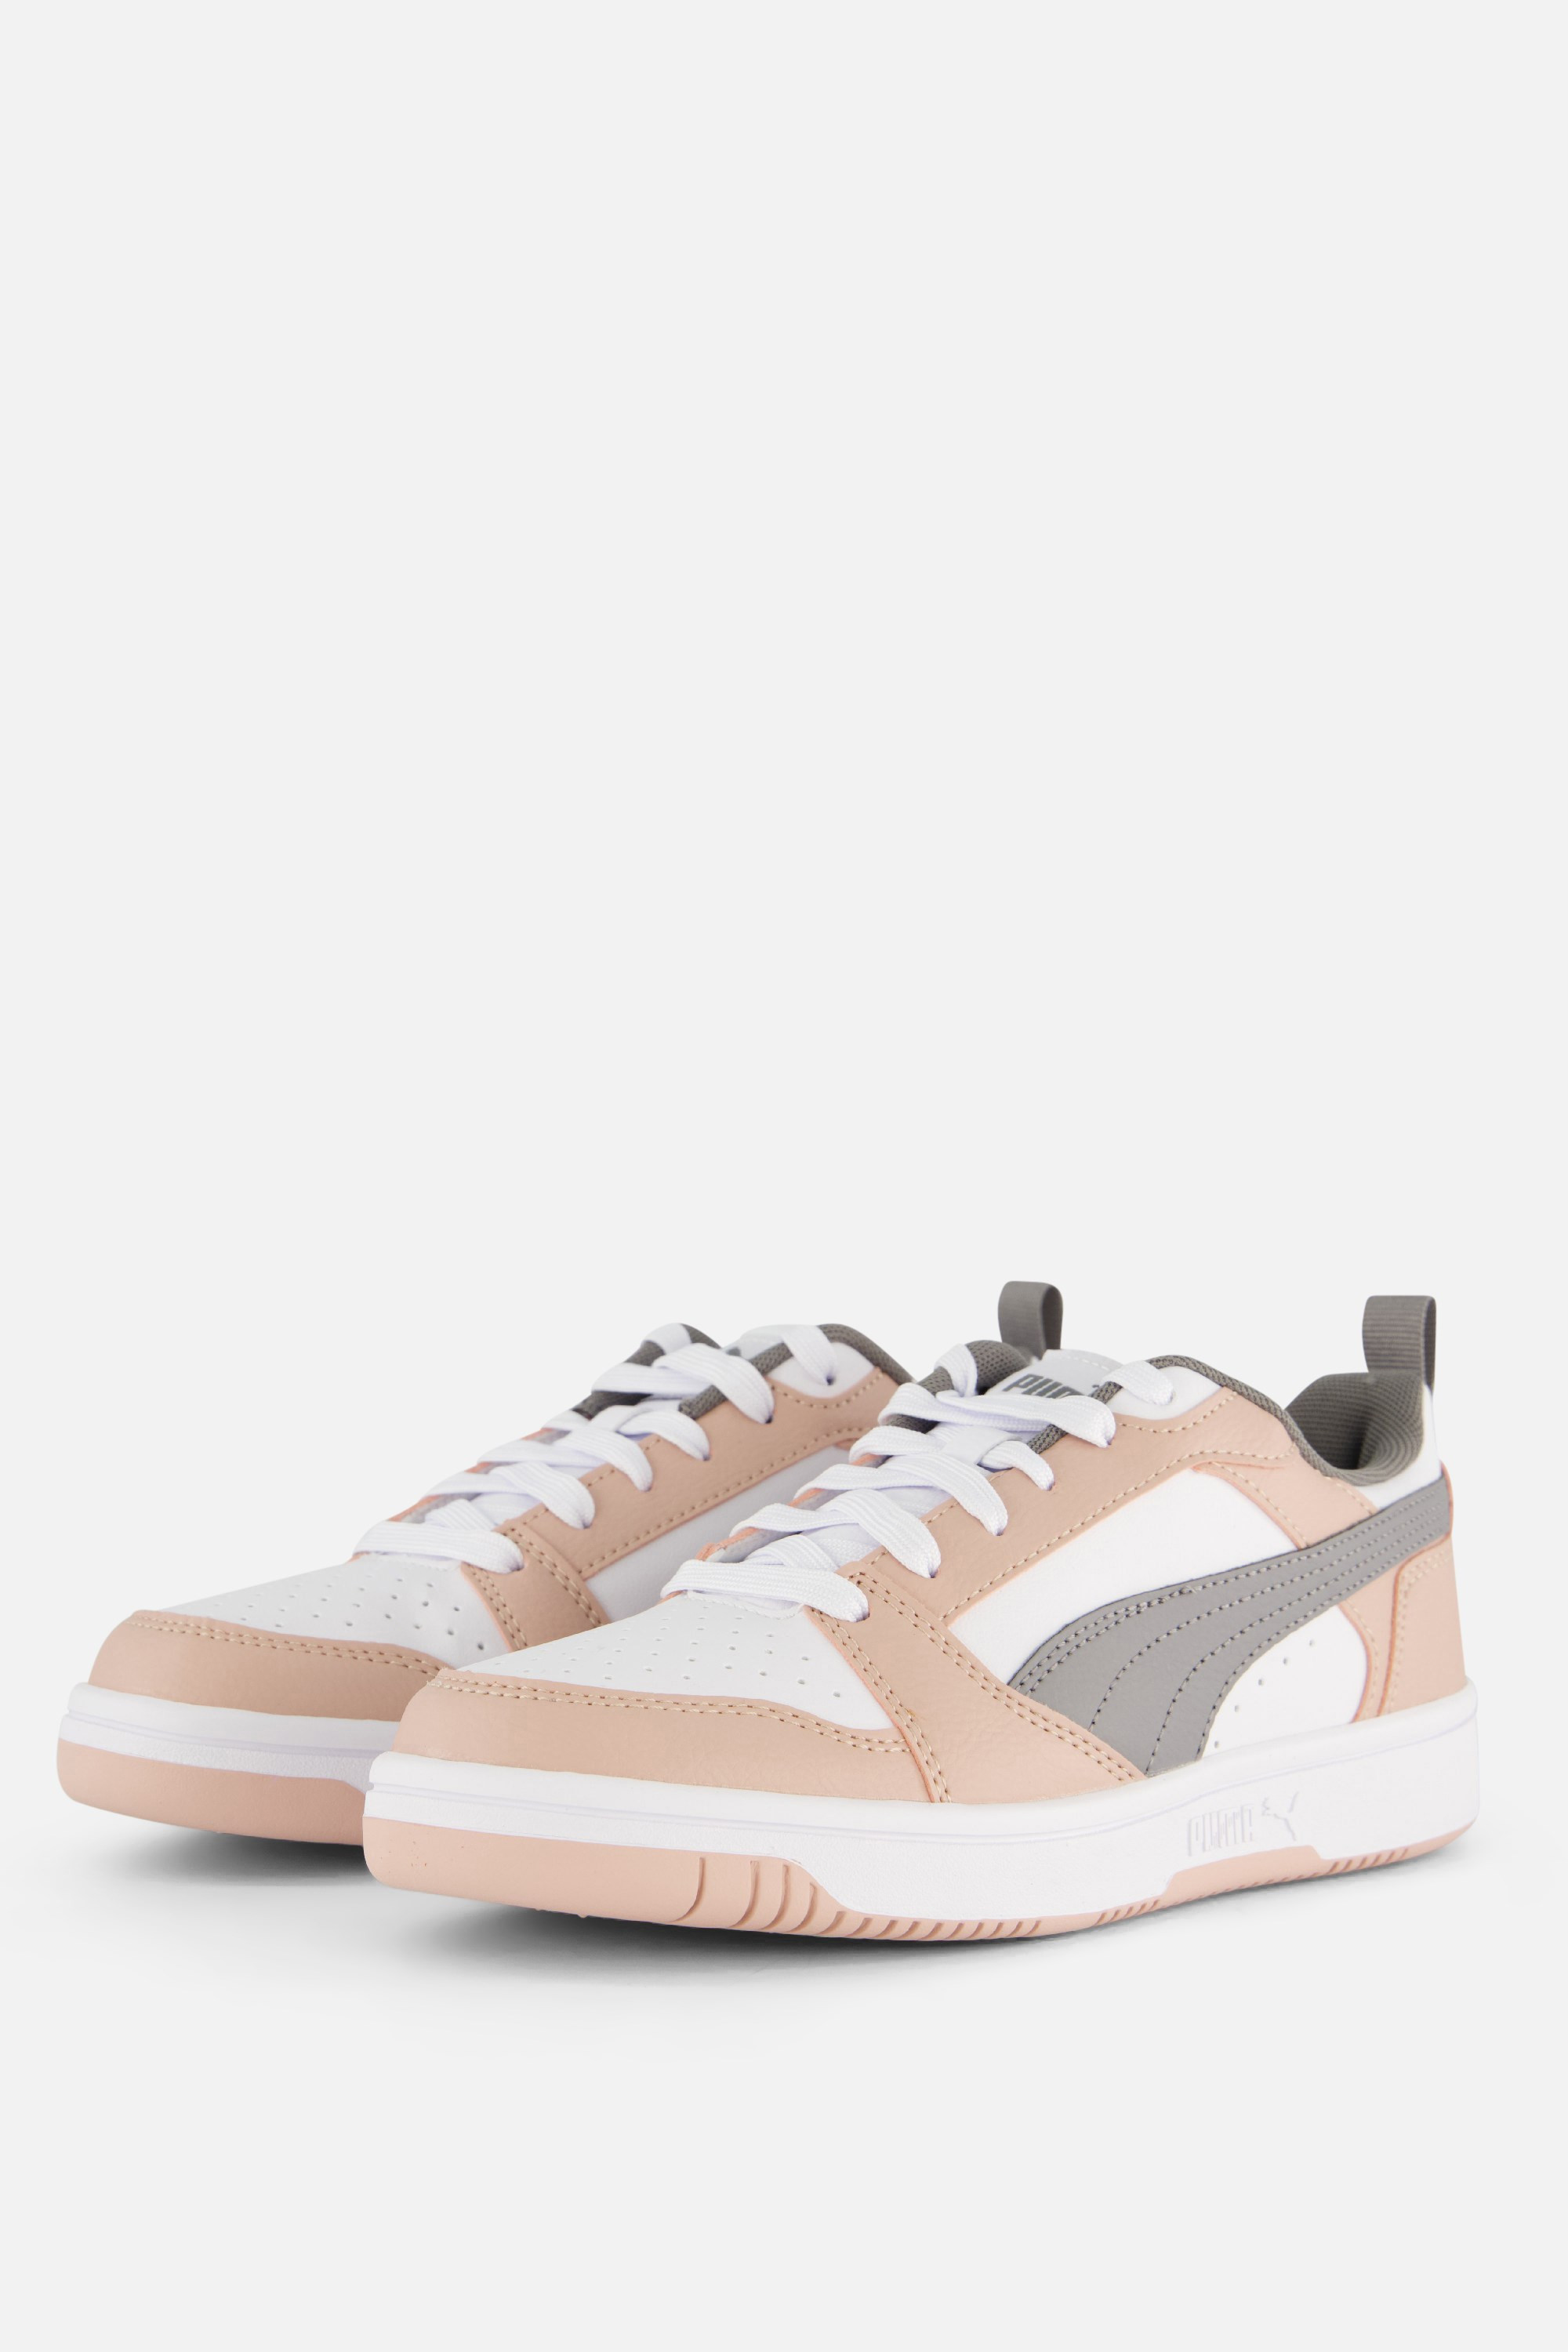 Puma Puma Rebound Low roze Sneakers roze Synthetisch